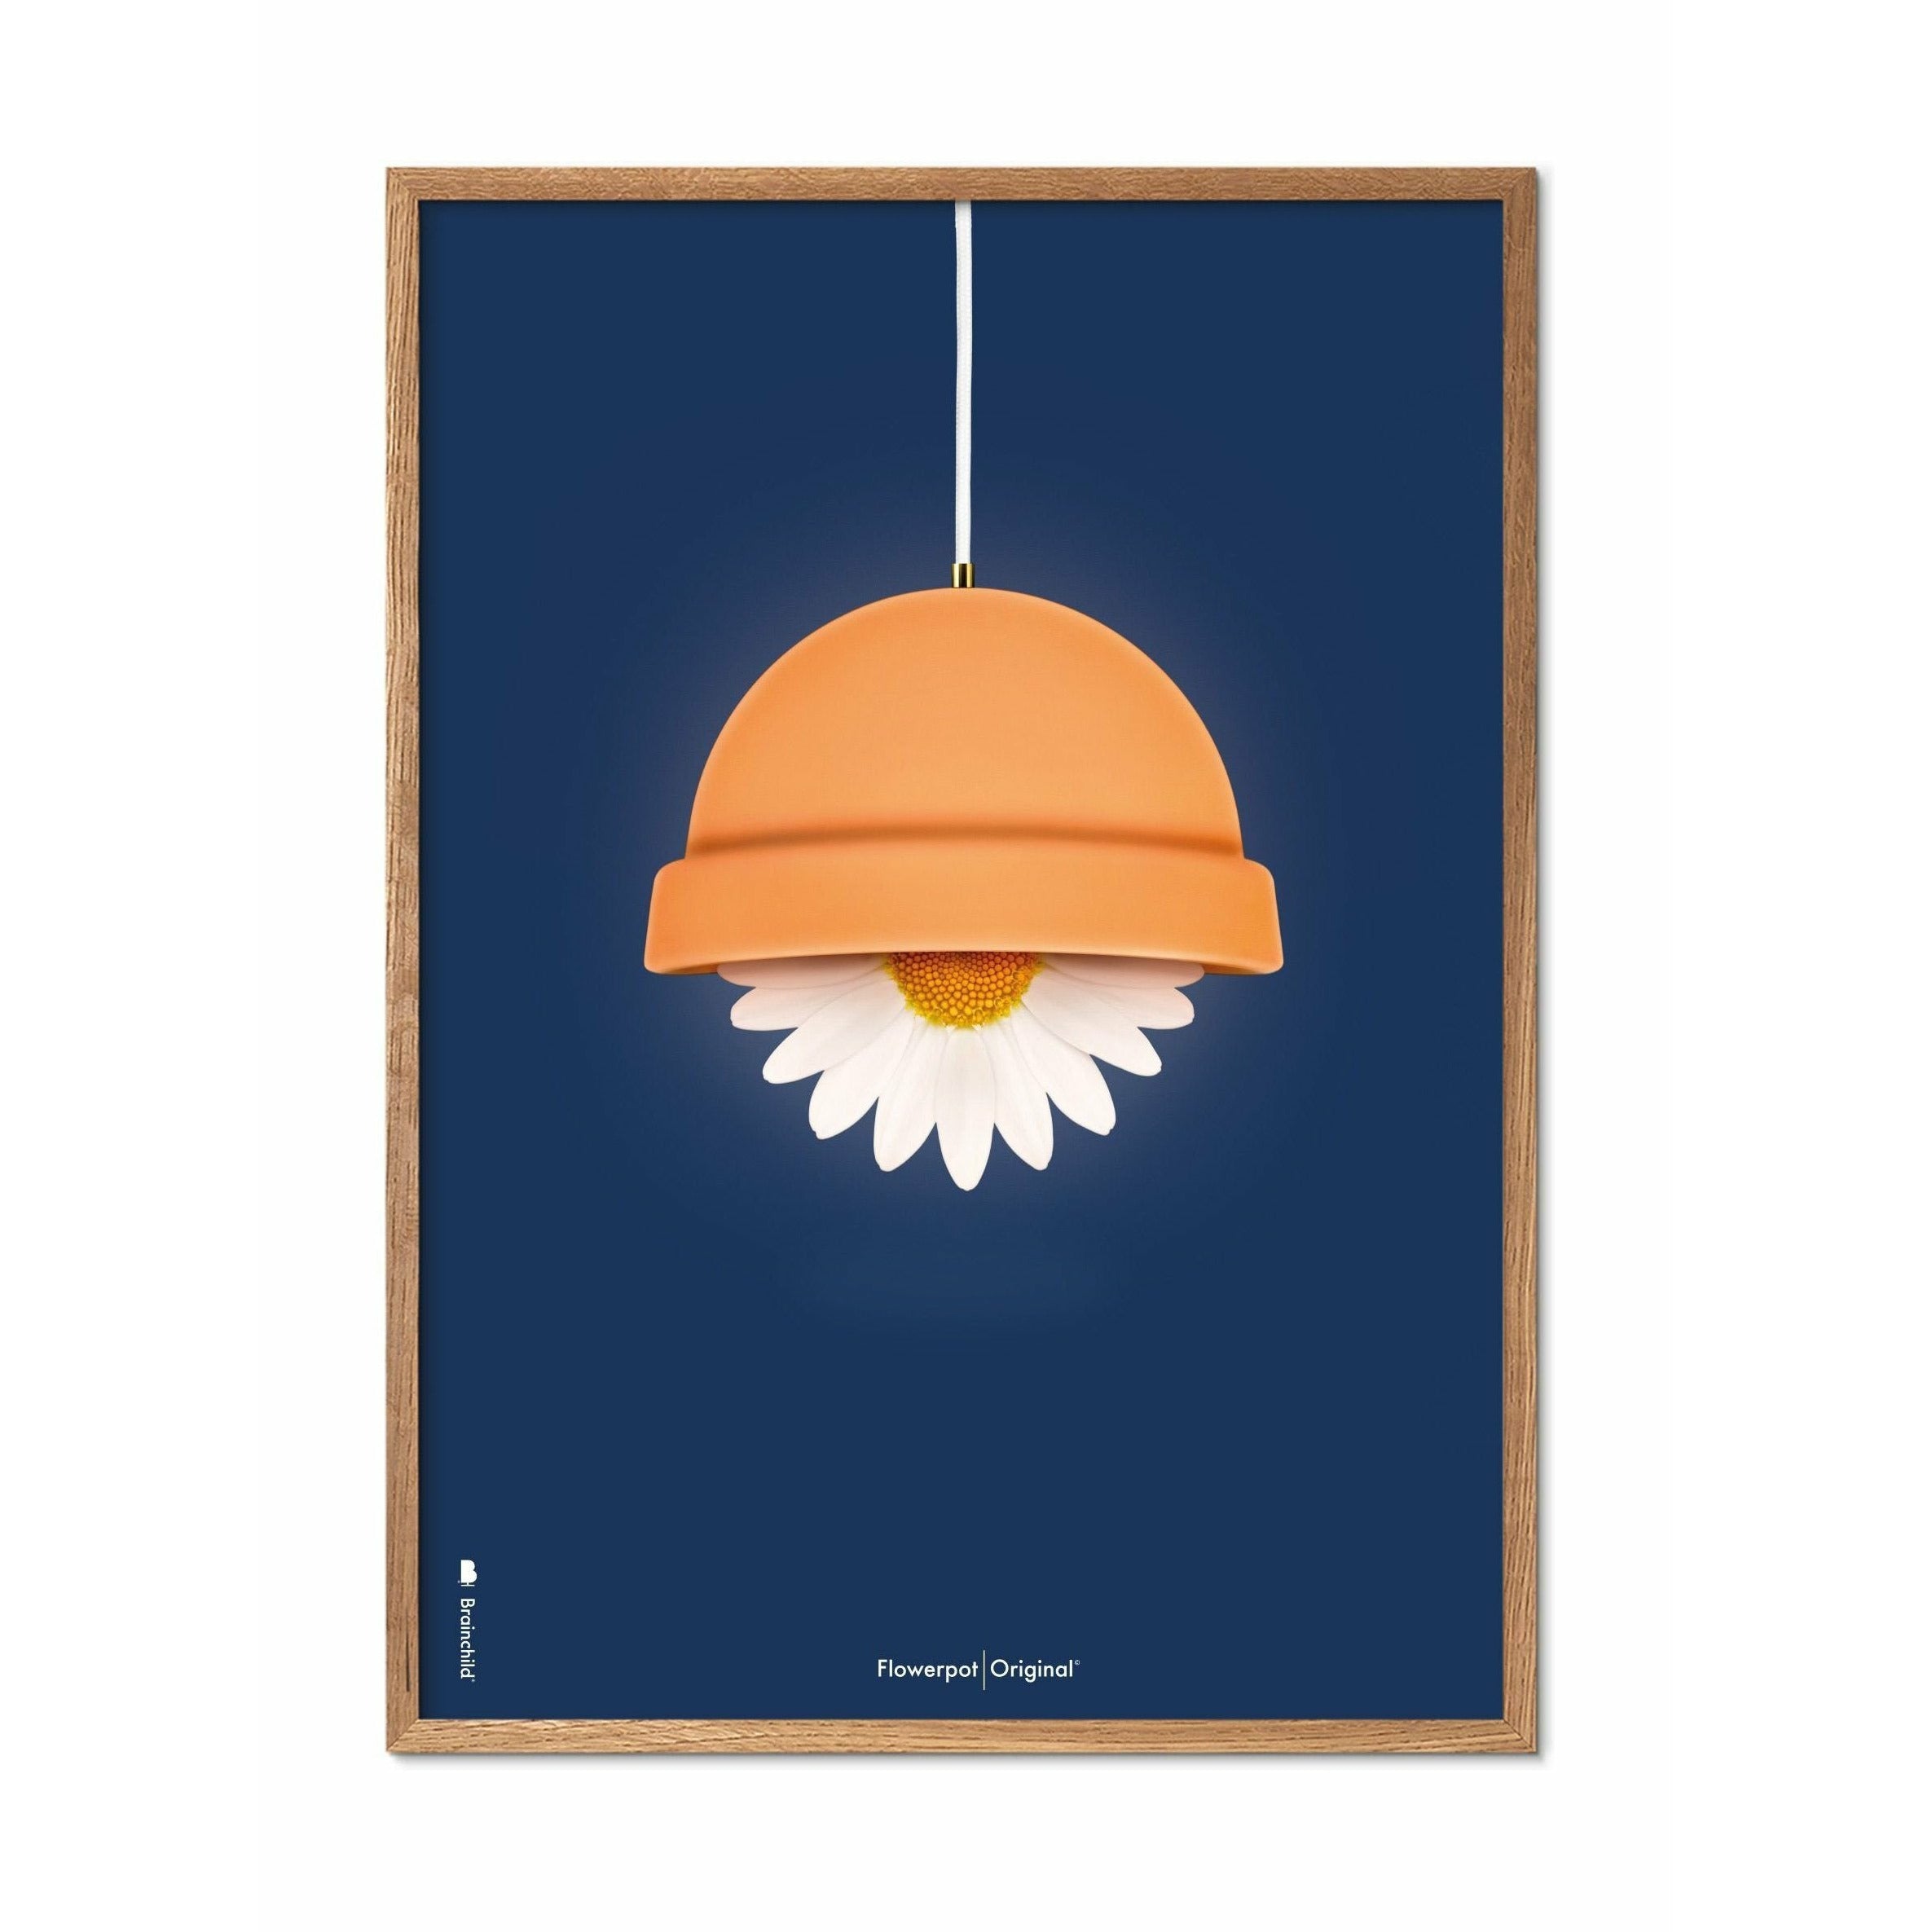 Brainchild Flowerpot Klassisk Plakat, Ramme I Lyst Træ 70X100 Cm, Mørkeblå Baggrund